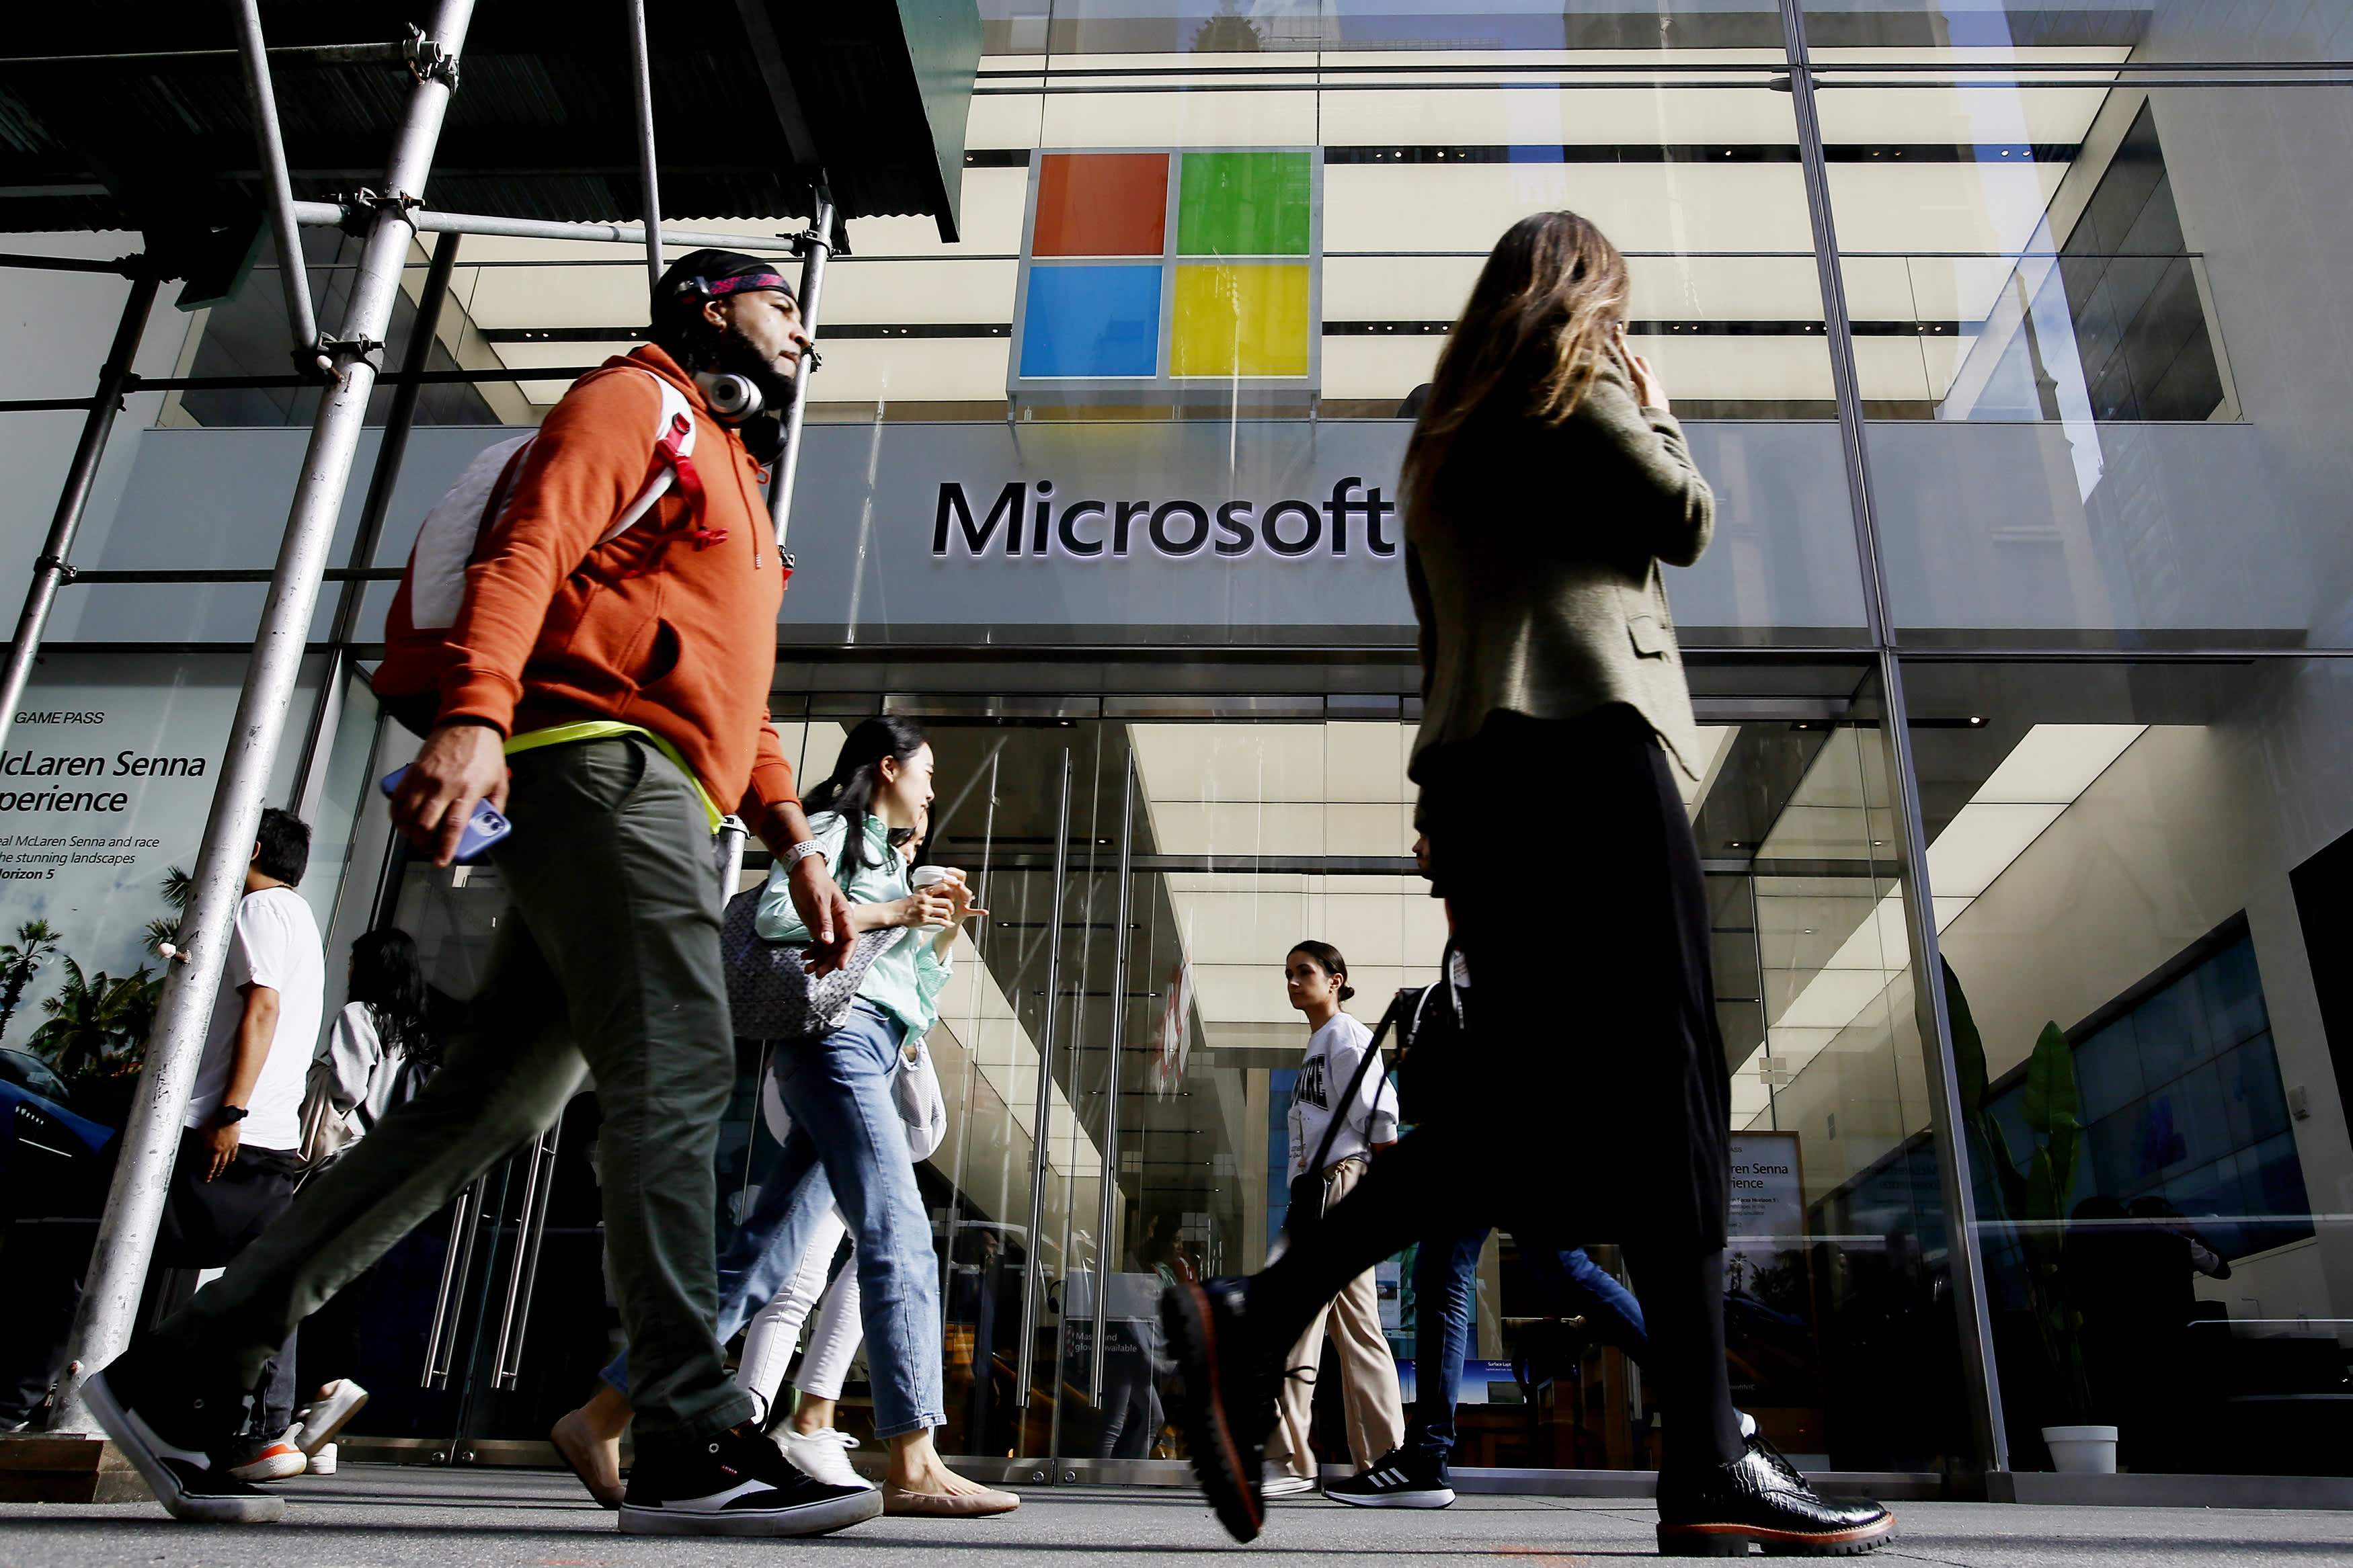 Guggenheim downgrades Microsoft, and says vulnerabilities may worsen during an economic downturn